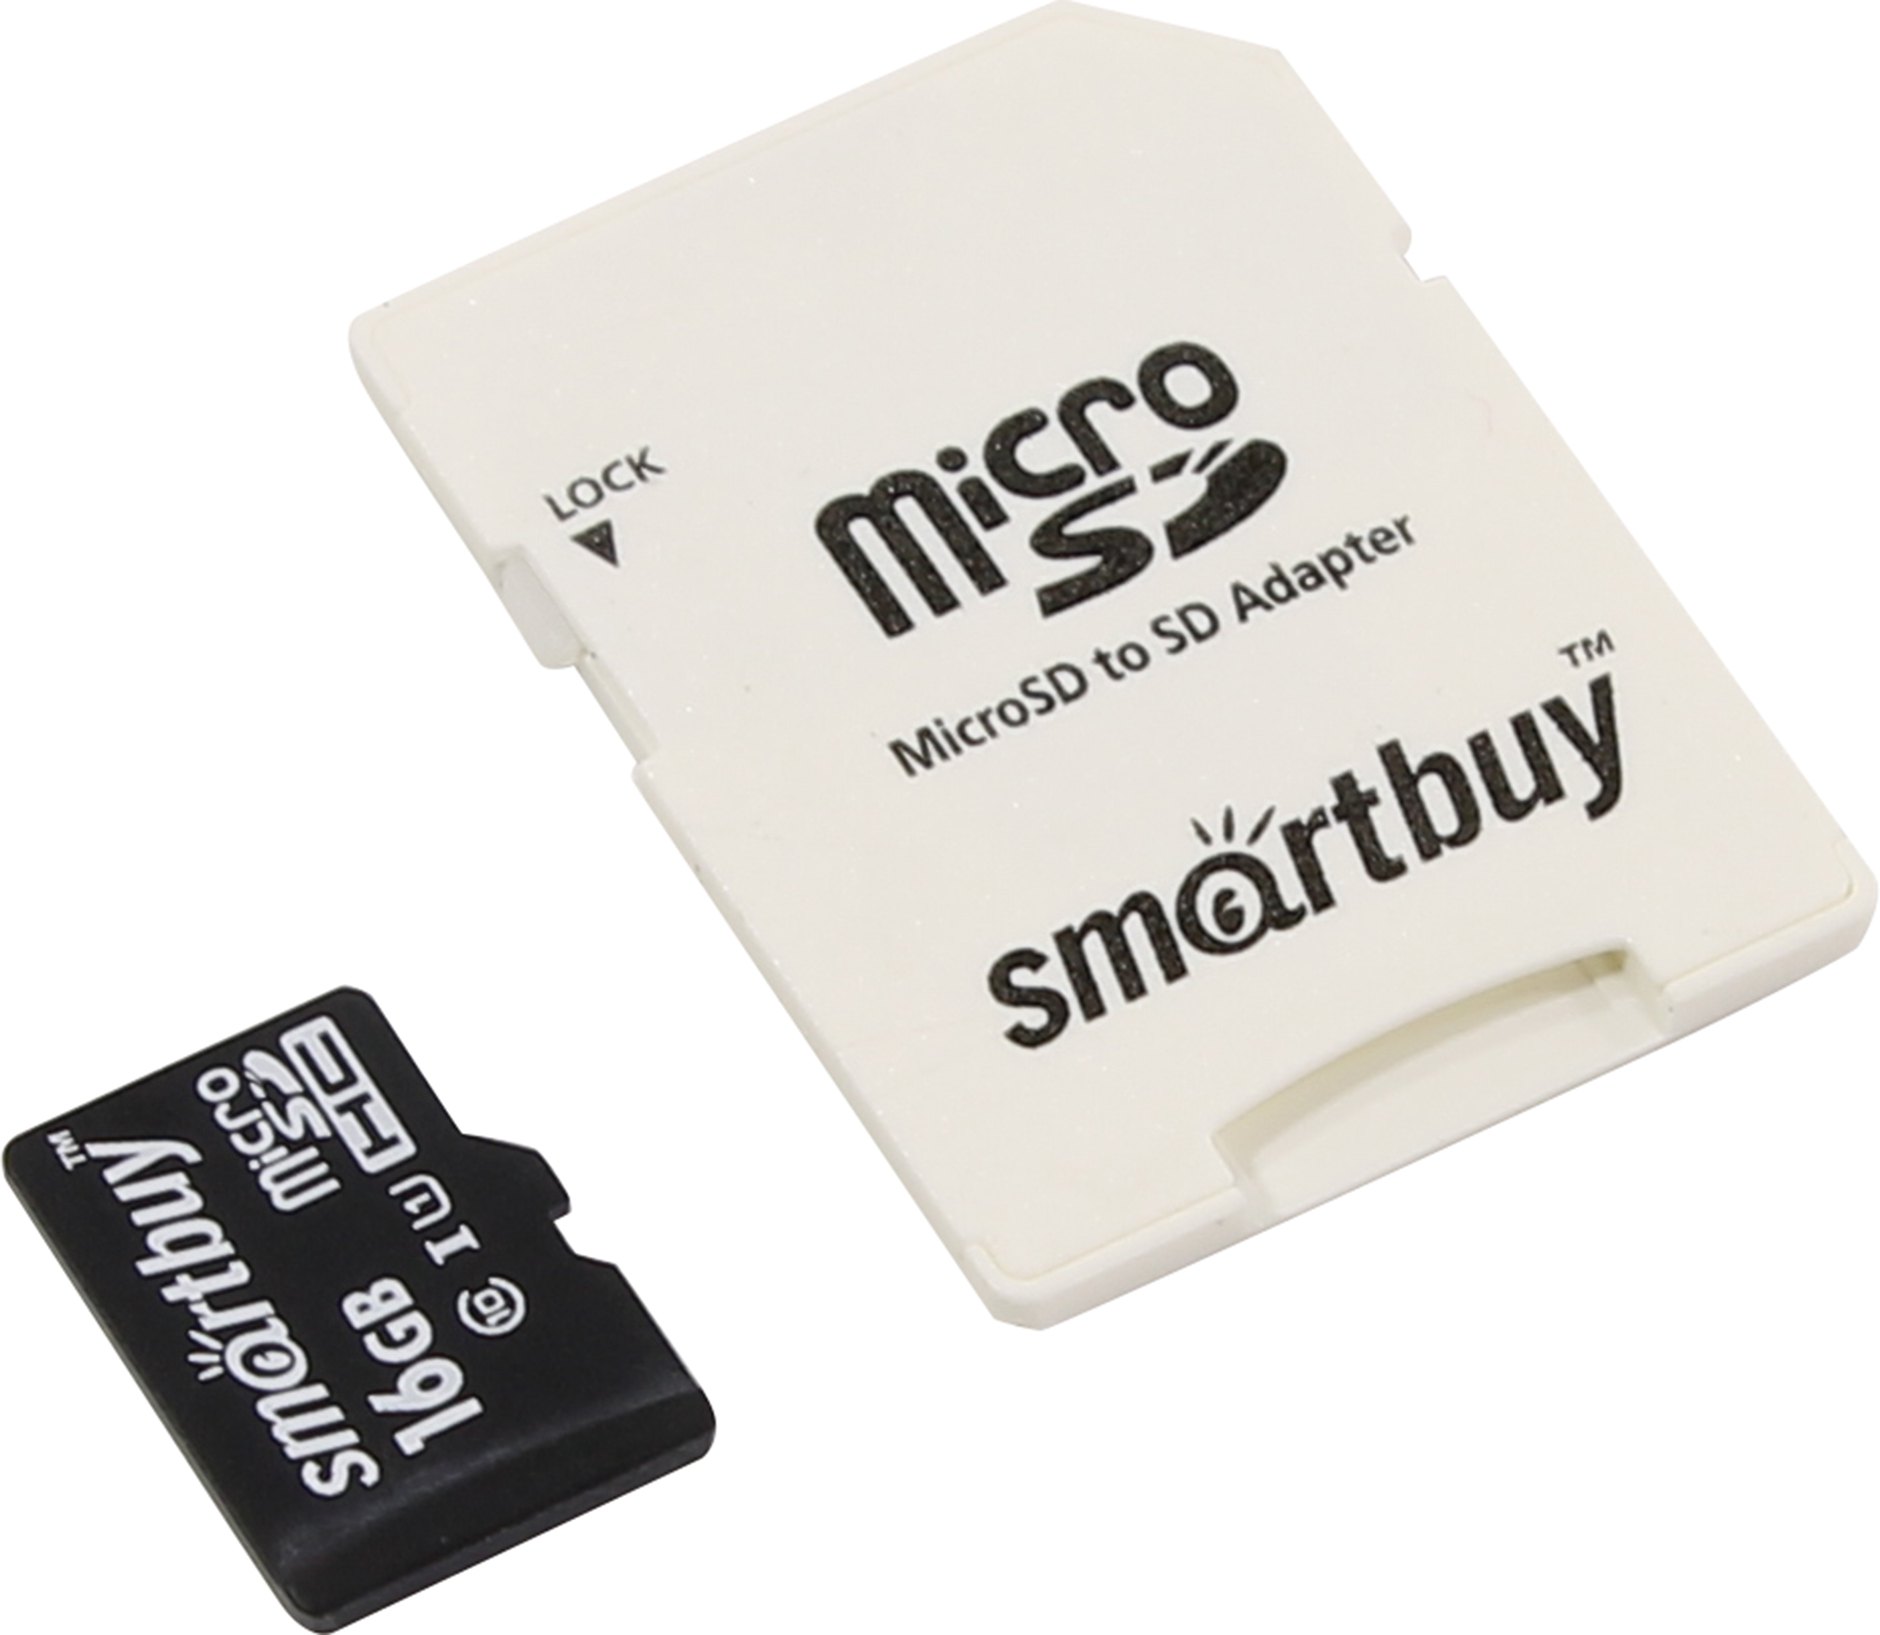 Microsdhc uhs i u1. SMARTBUY 16 GB MICROSD. Карта памяти 16 ГБ SMARTBUY. Micro SDHC карта памяти SMARTBUY 16gb class 10 UHS-I (С адаптером SD). MICROSD 16gb SMARTBUY class 10 MICROSDHC UHS-1 + SD Adapter.